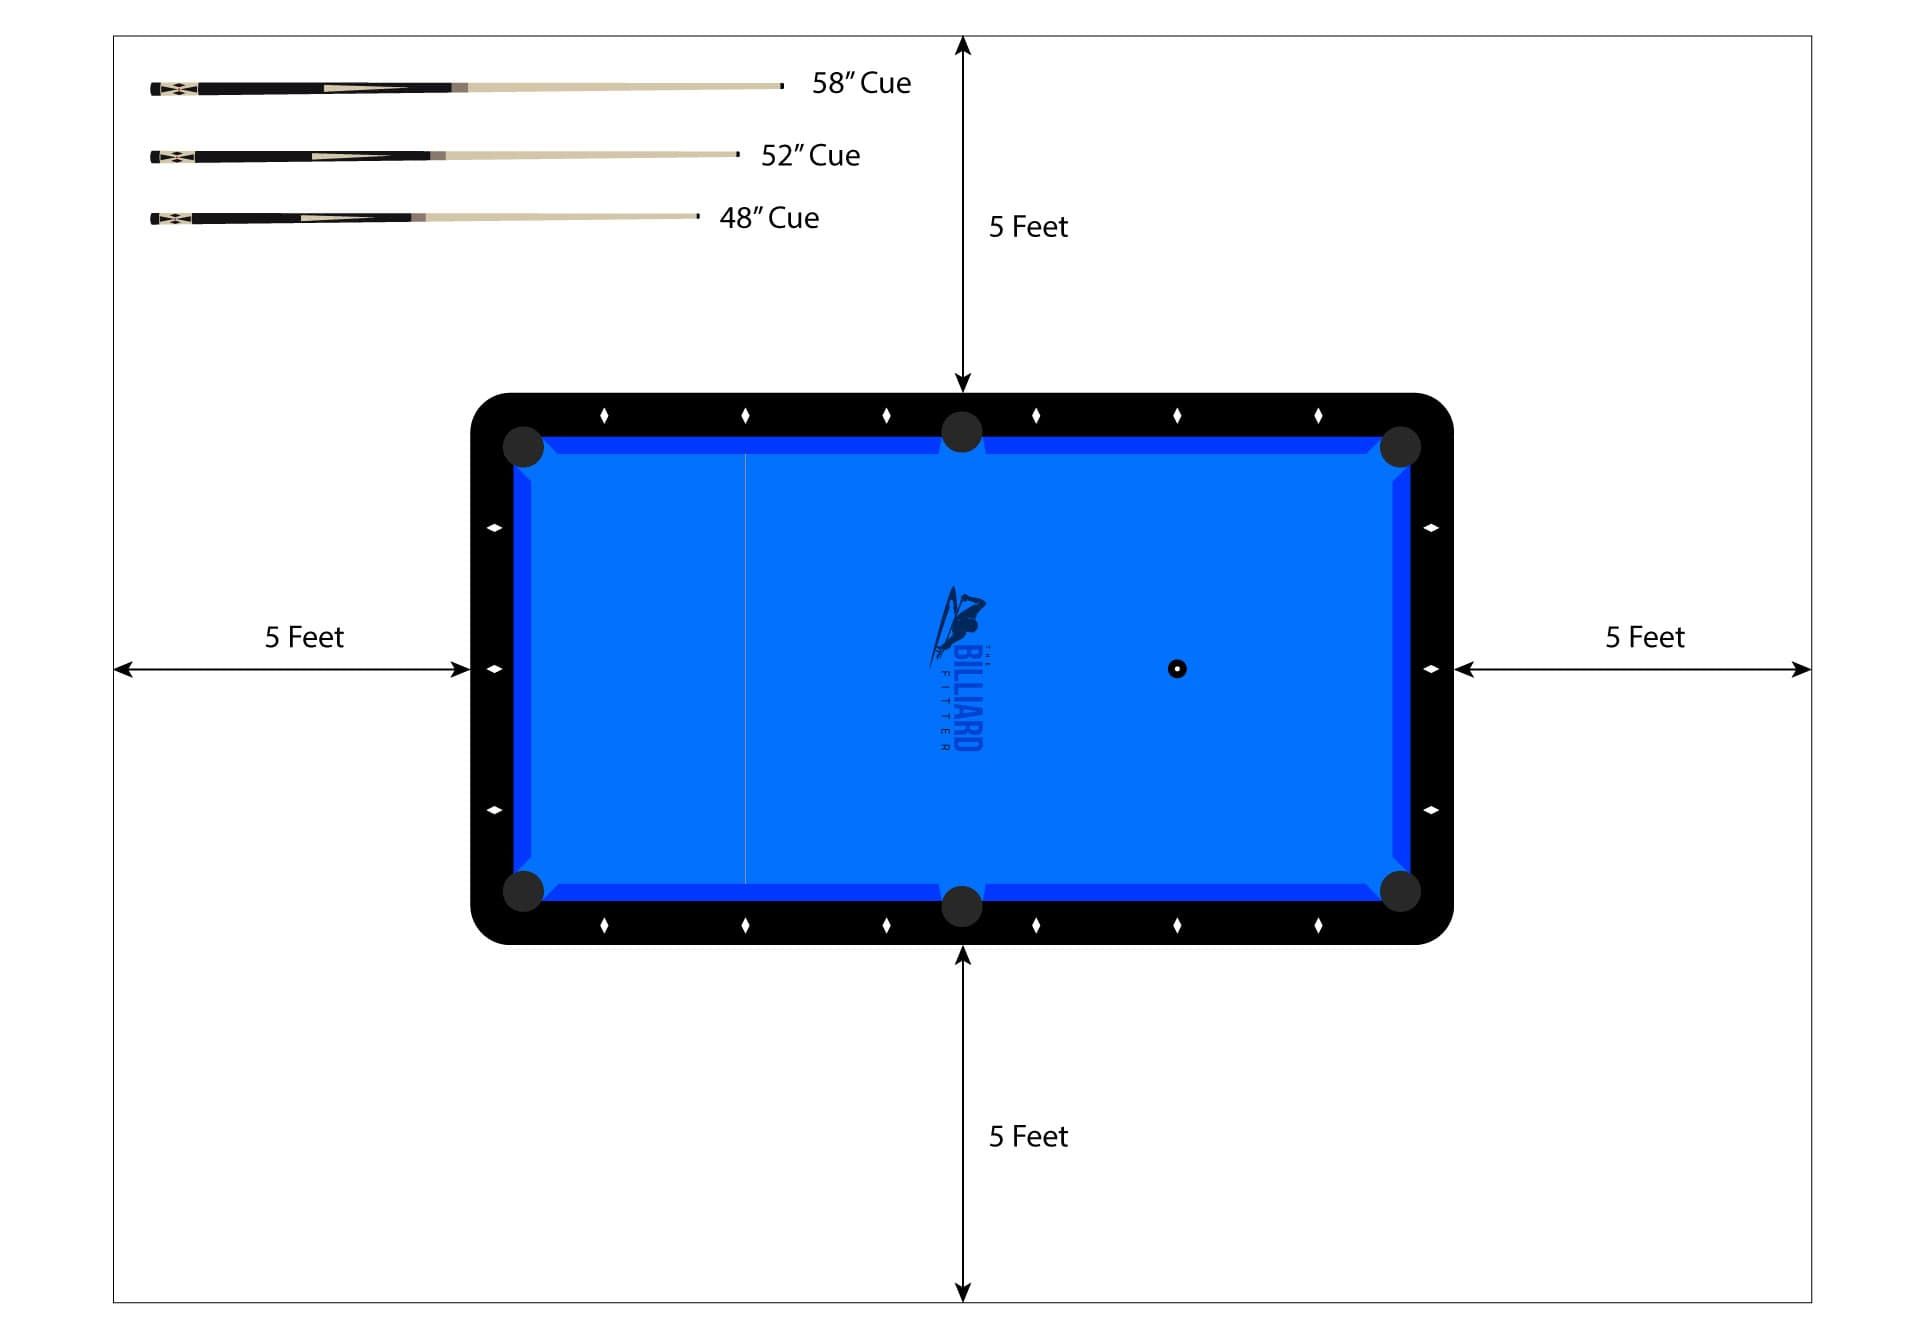 Pool table spacing illustration